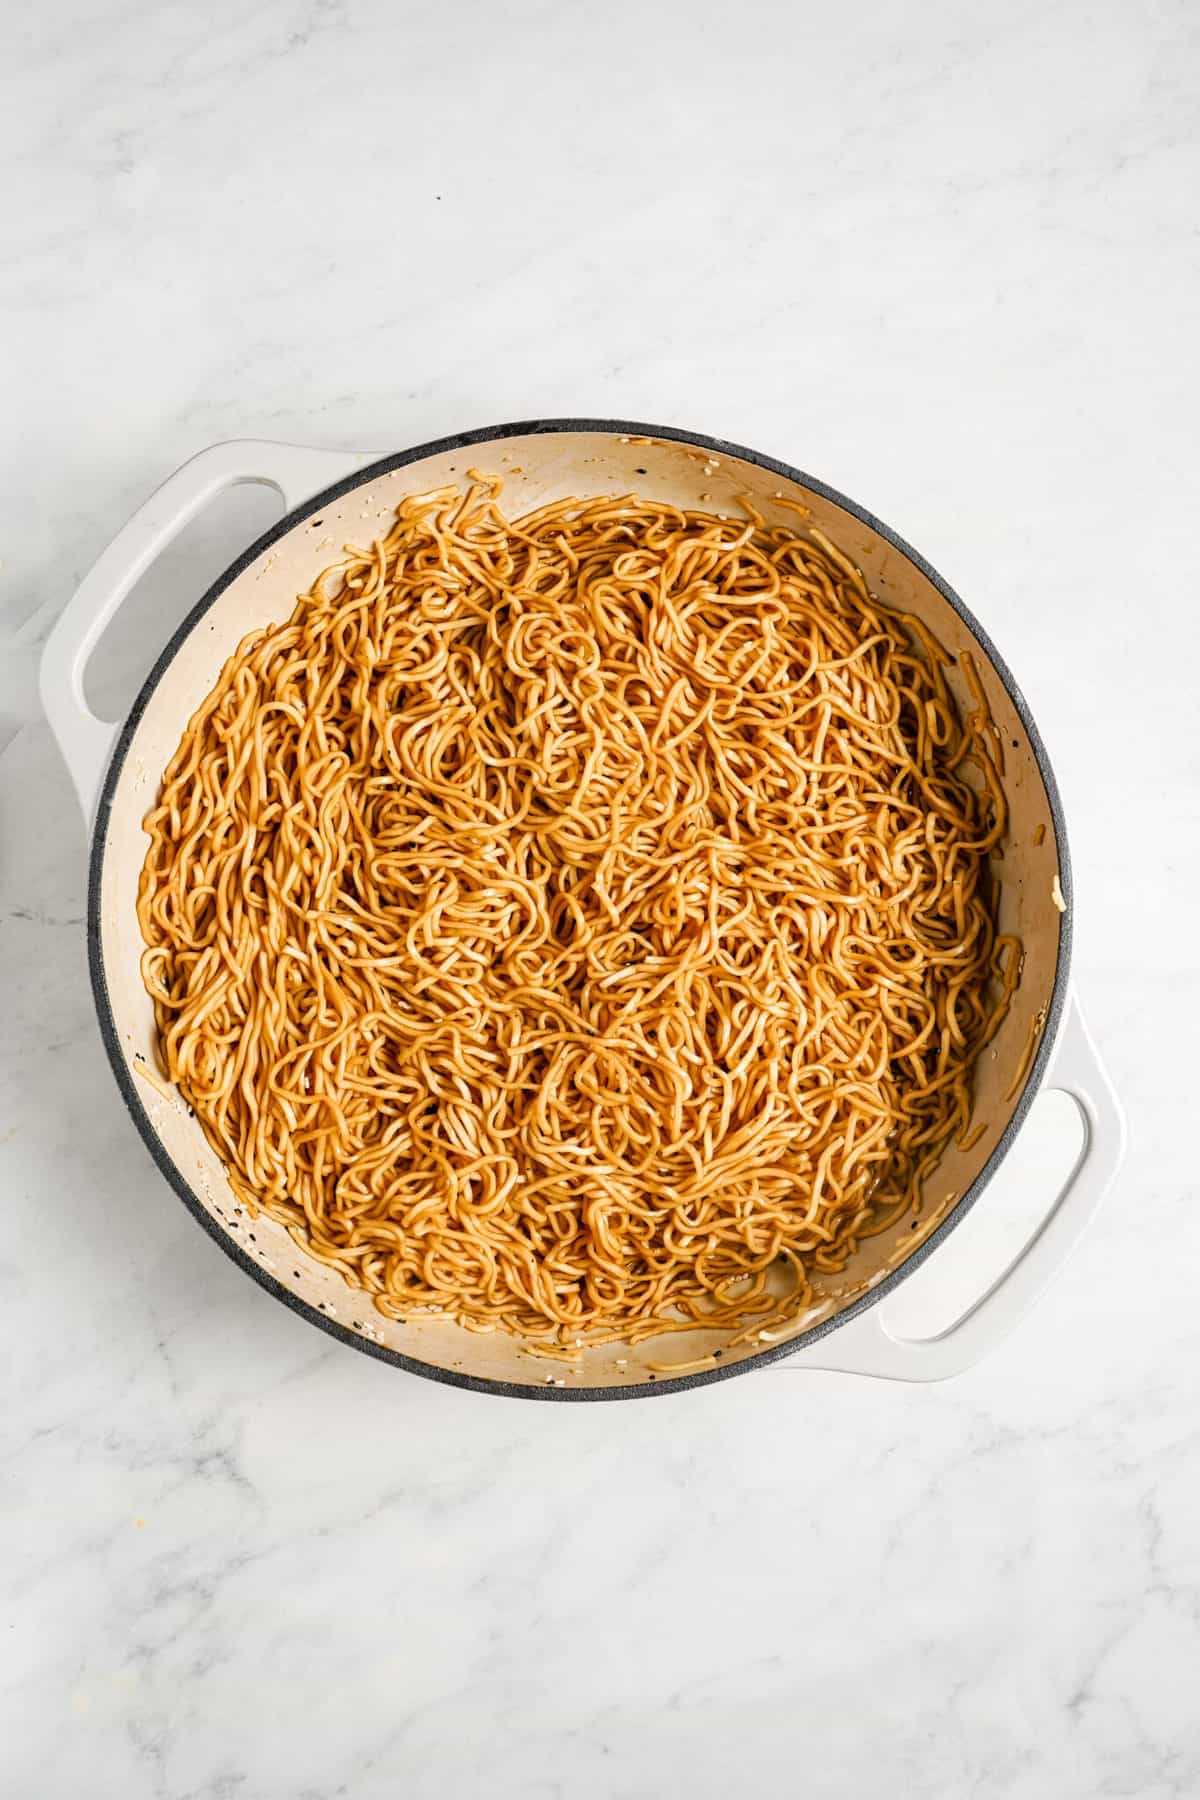 Quick 15 Minute Vegan Sesame Noodles | Jessica in the Kitchen